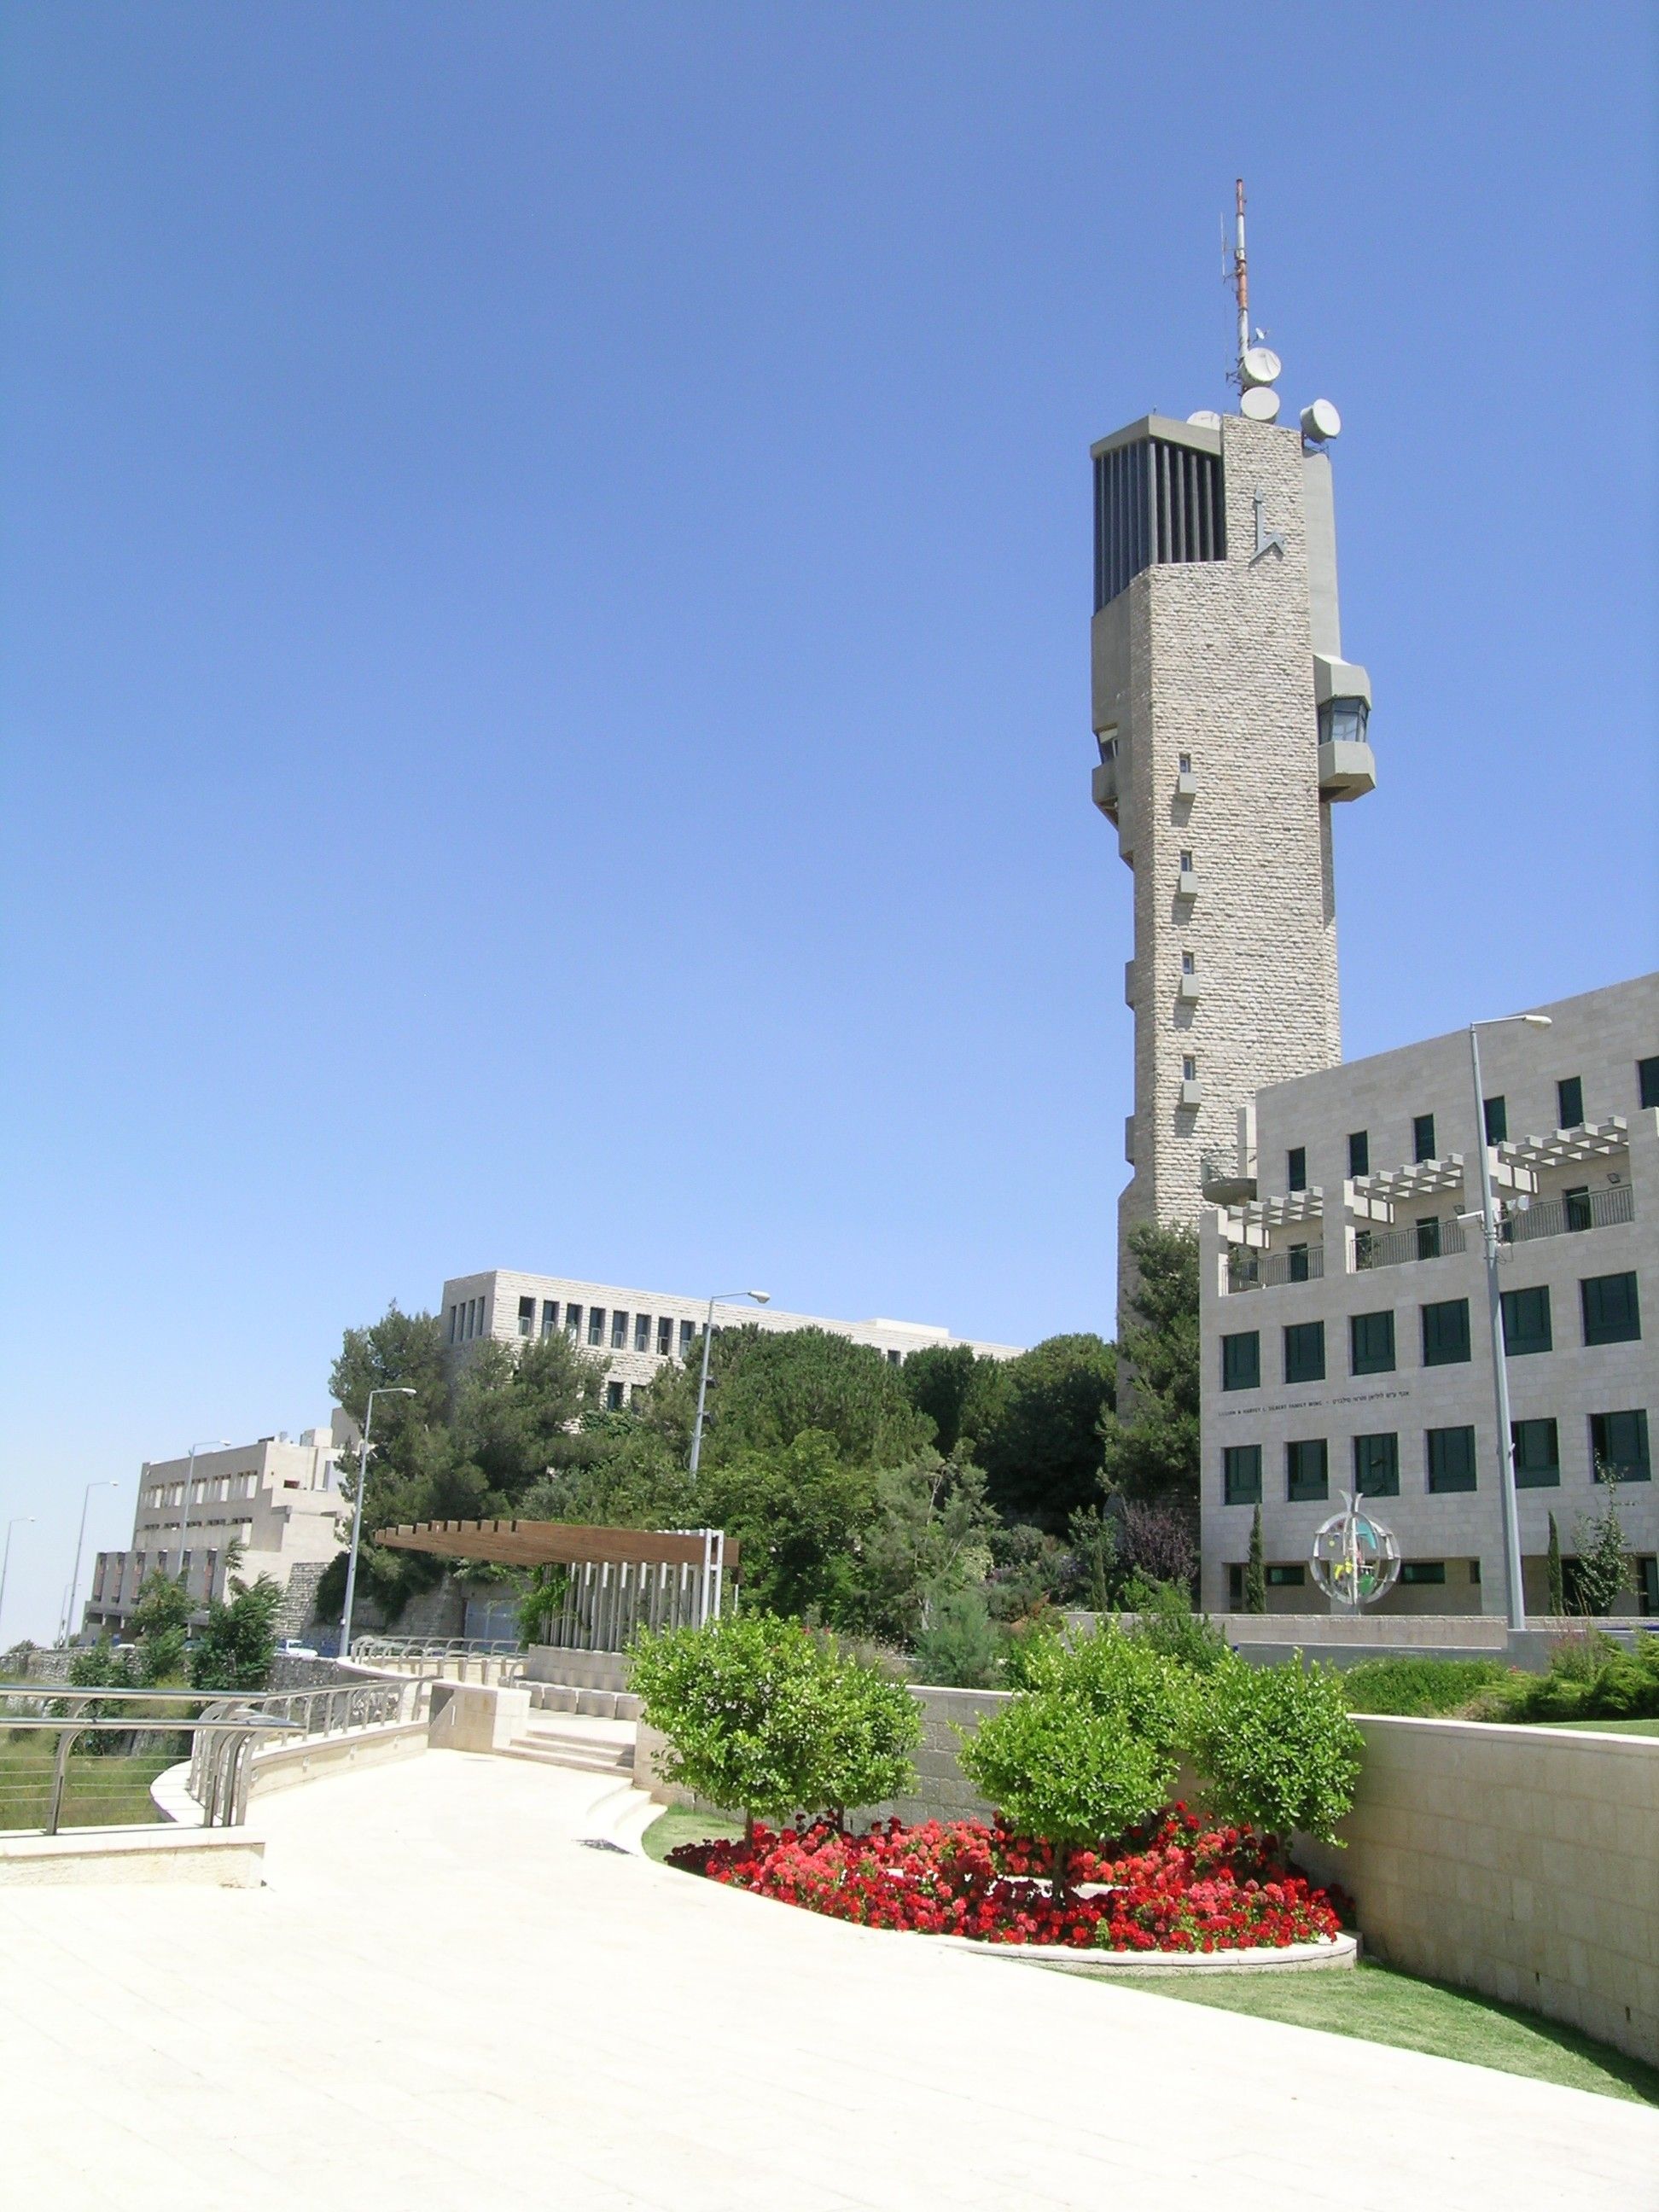 Jerusalem – A Growing Knowledge Hub